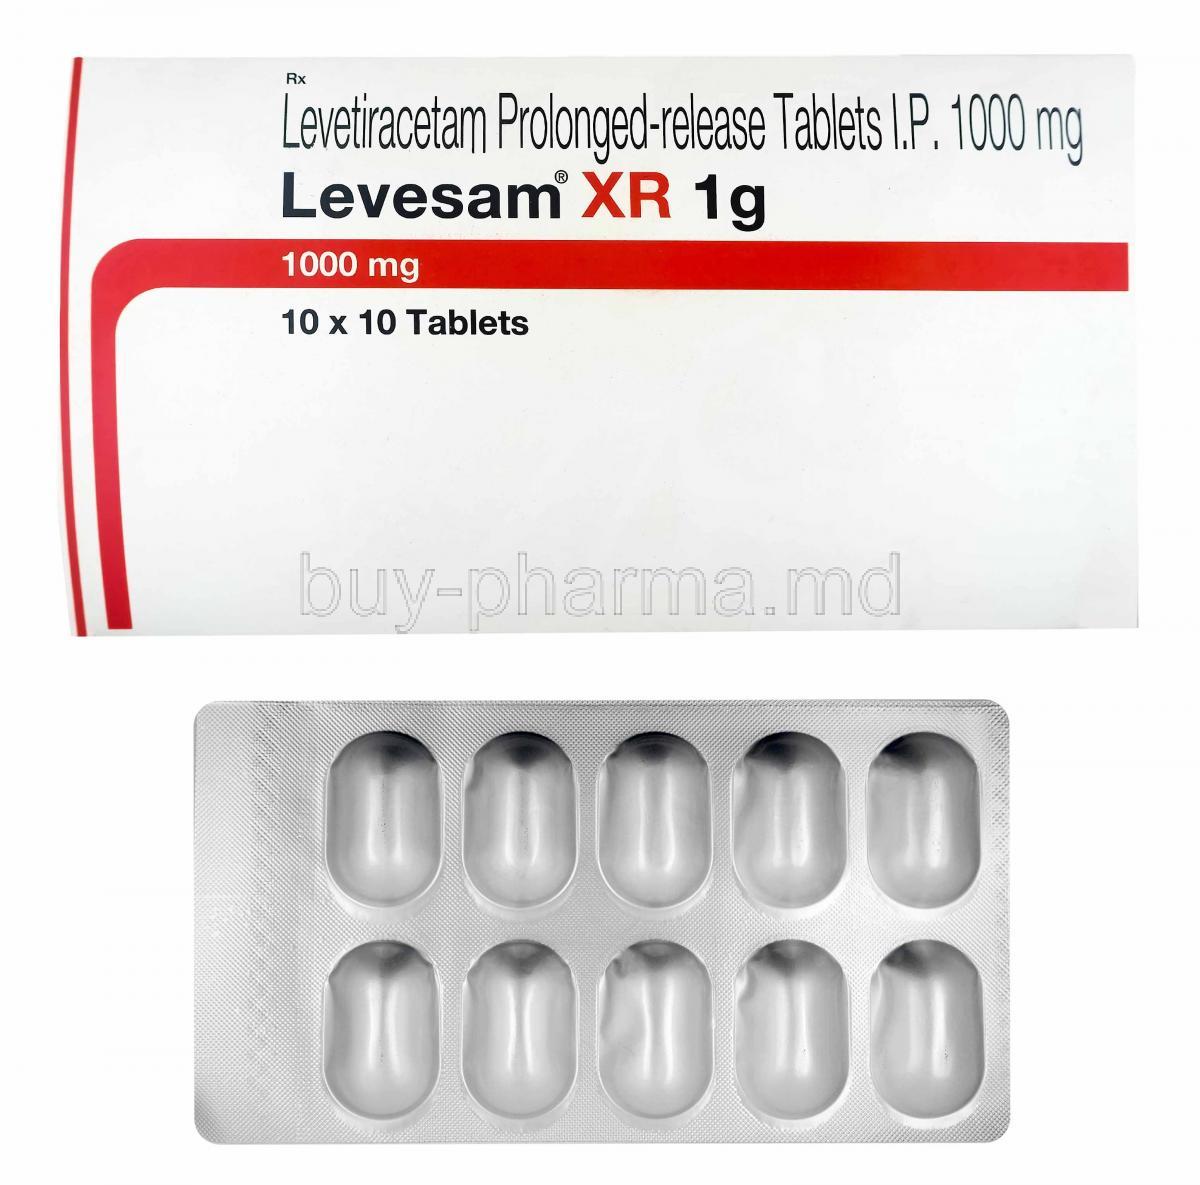 Levesam, Levetiracetam 1000mg box and tablets